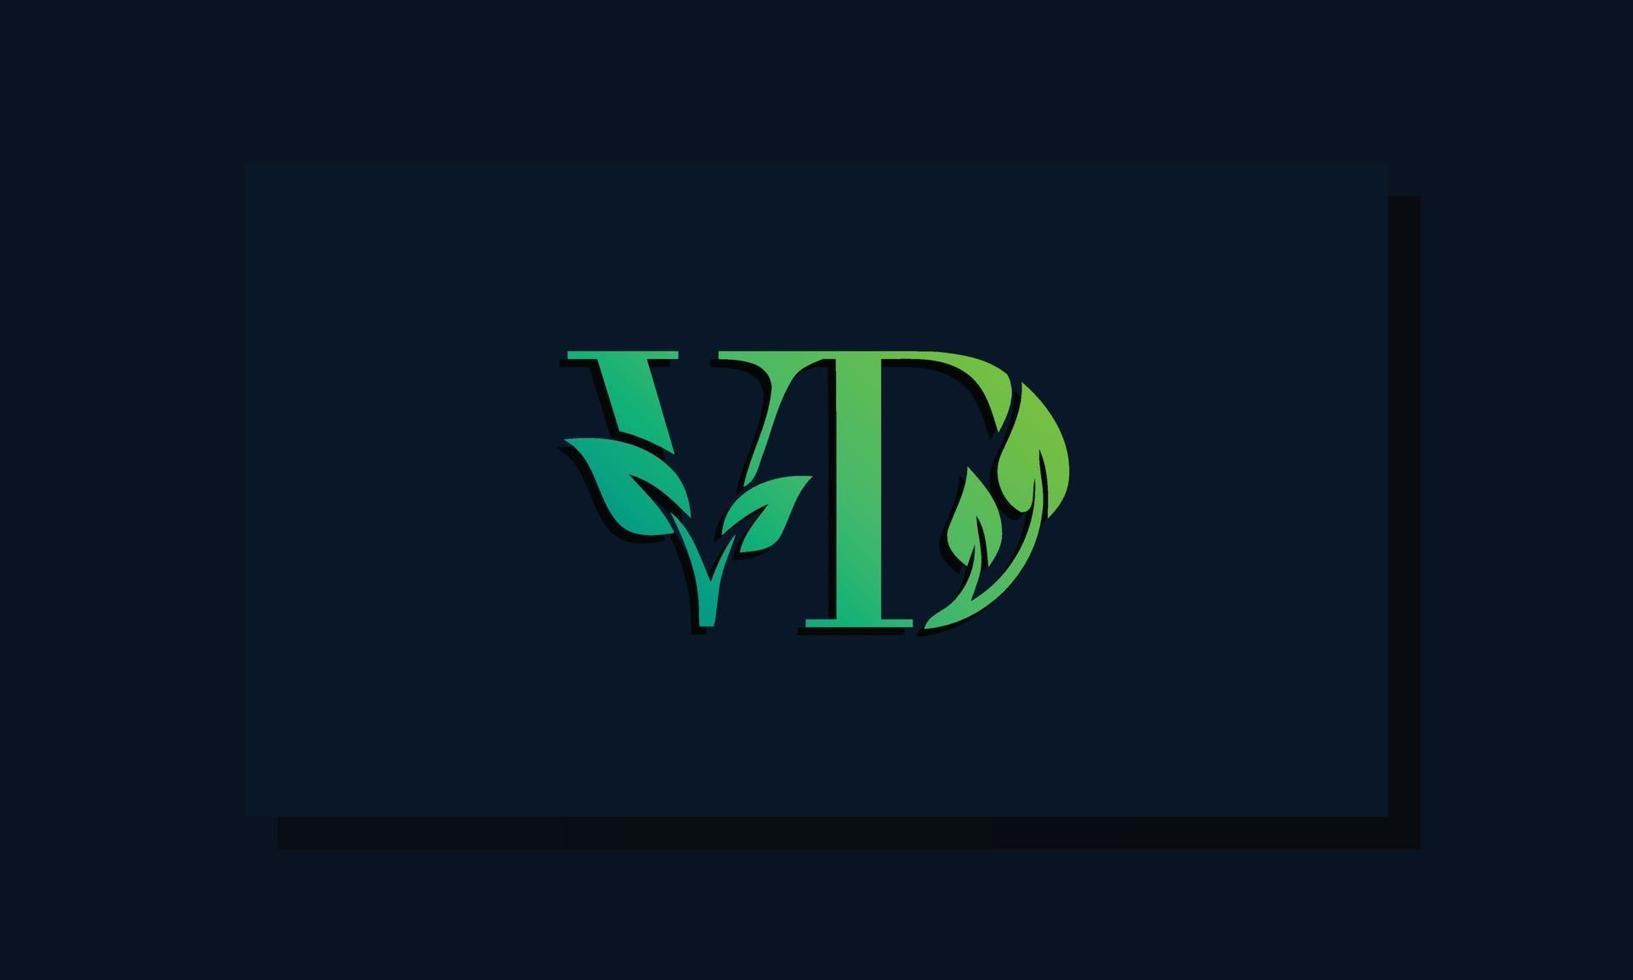 minimales Vd-Logo im Blattstil vektor